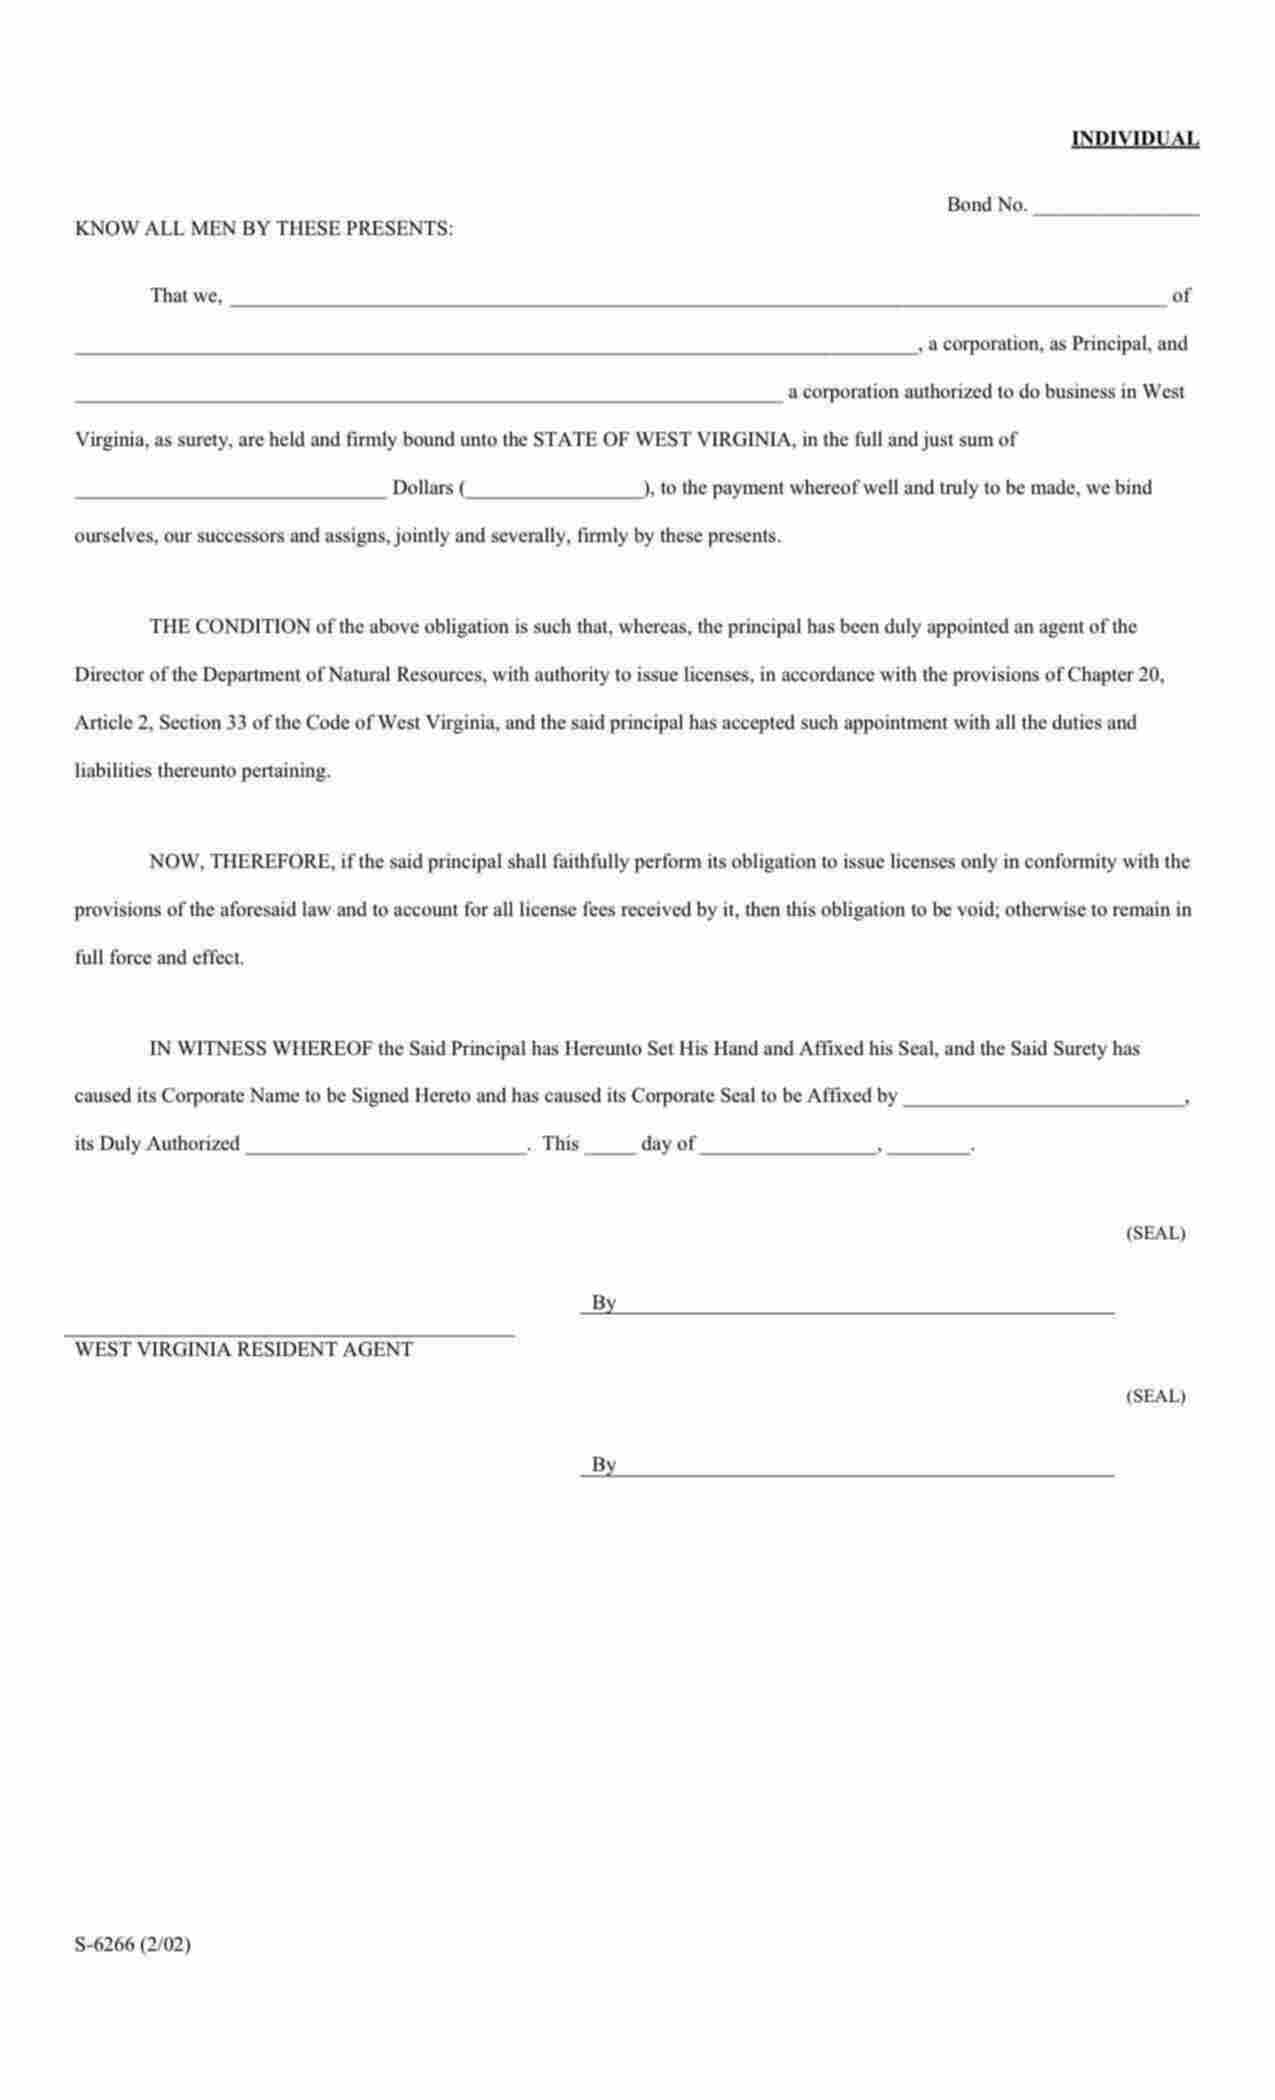 West Virginia Hunting/Fishing License (Individual) Bond Form